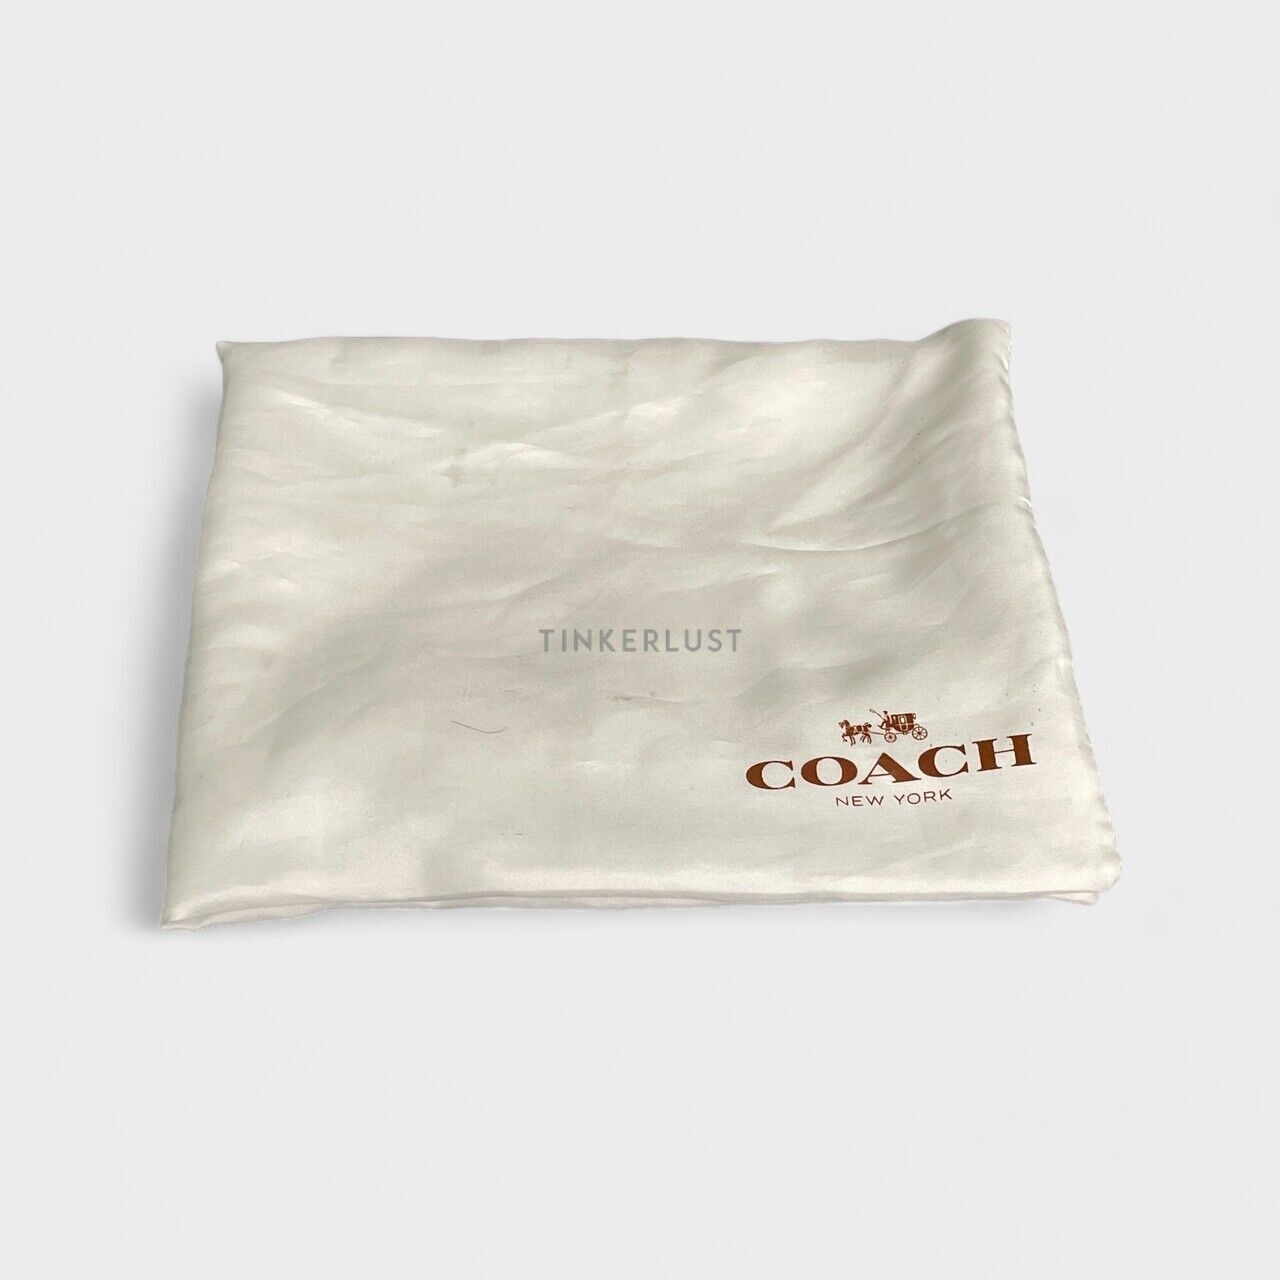 Coach Green Crossgrain Leather Satchel